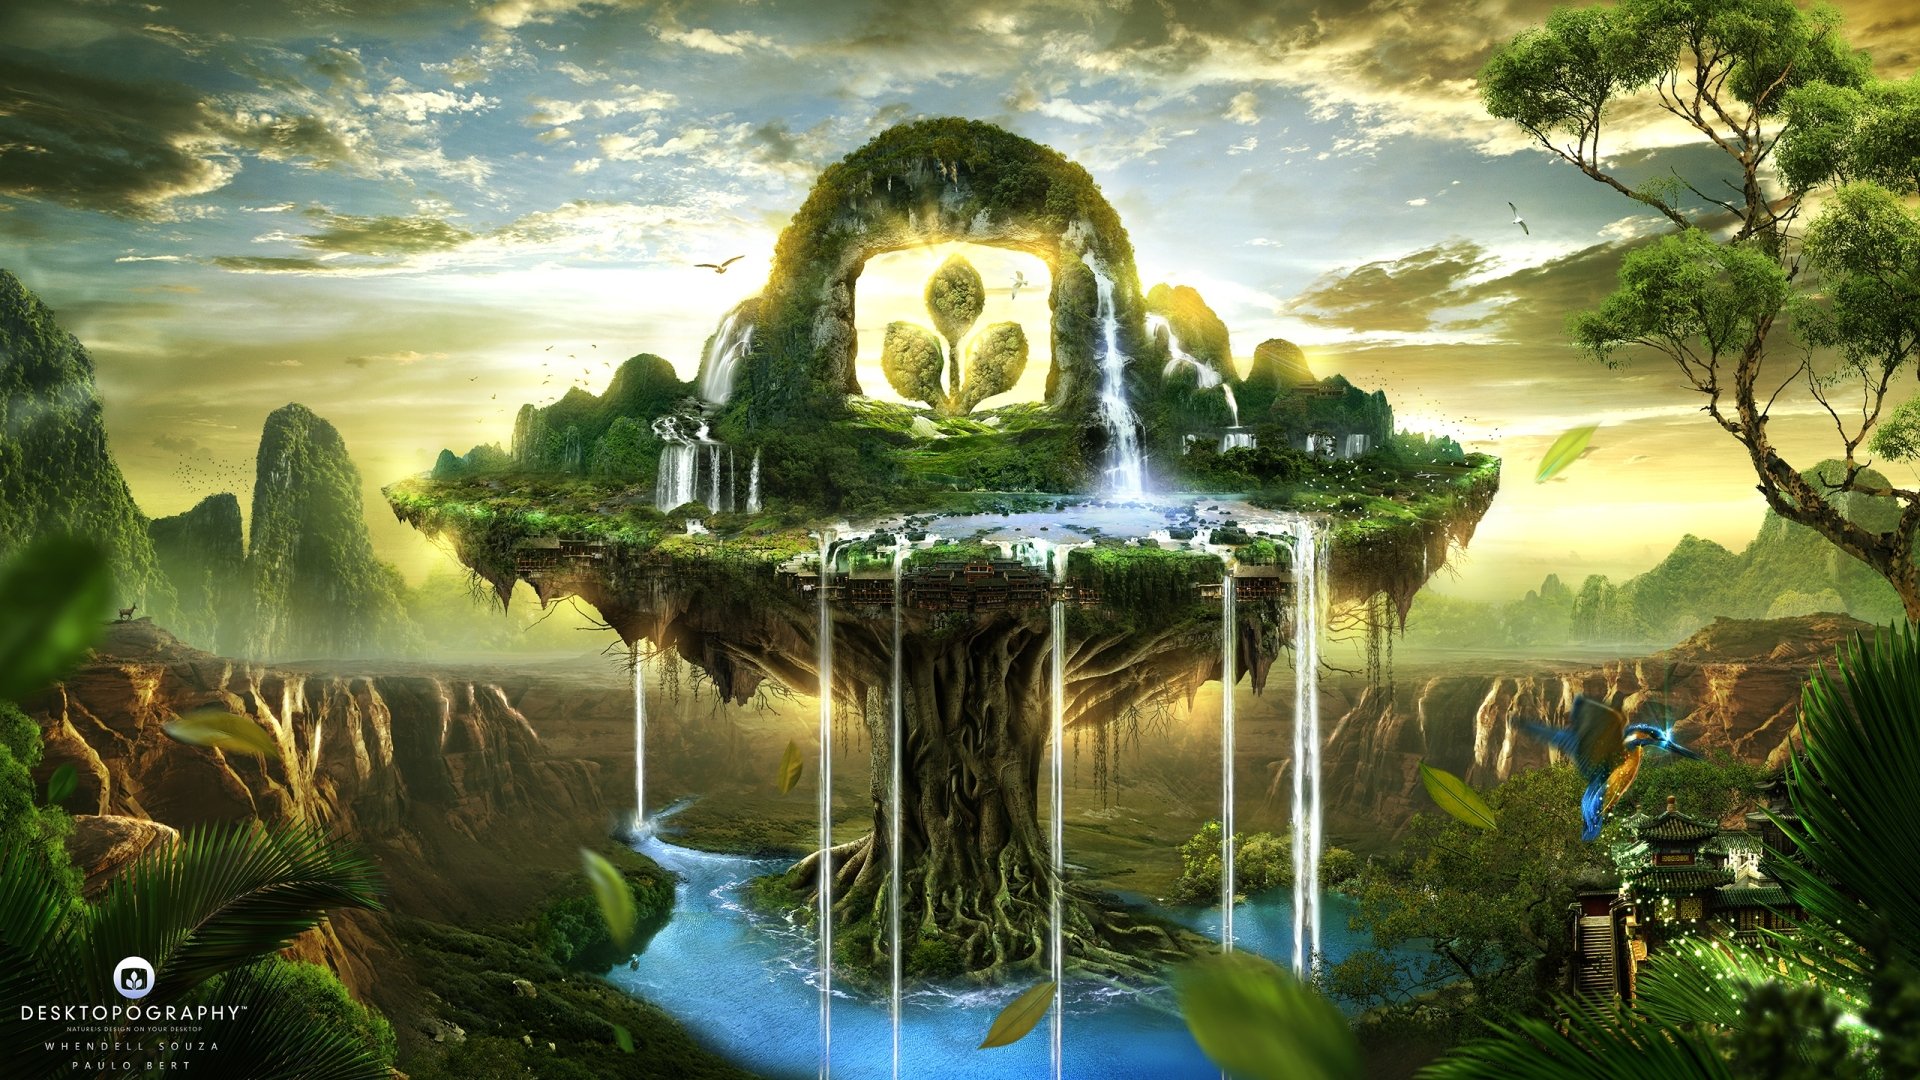 Download Landscape Fantasy Waterfall Artistic Desktopography  HD Wallpaper by Whendell Souza